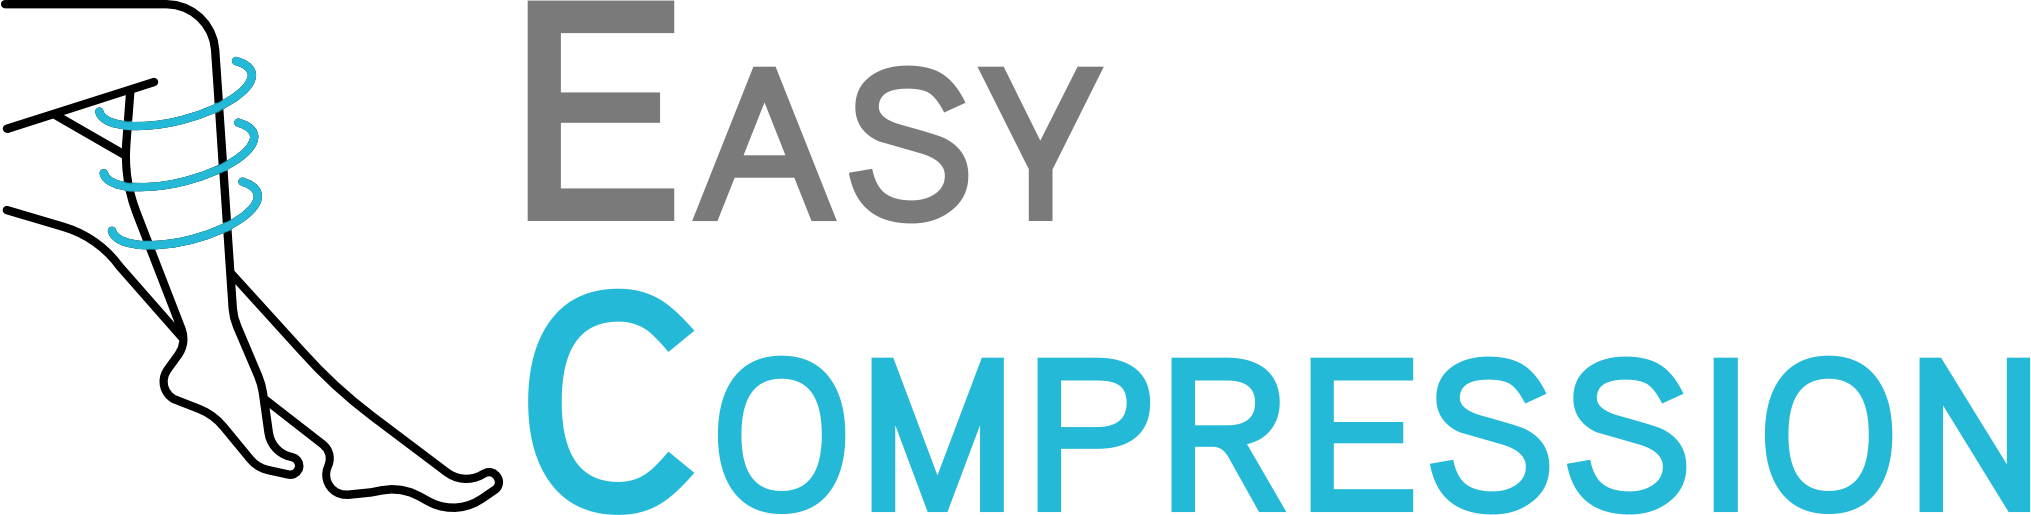 Easy-compression